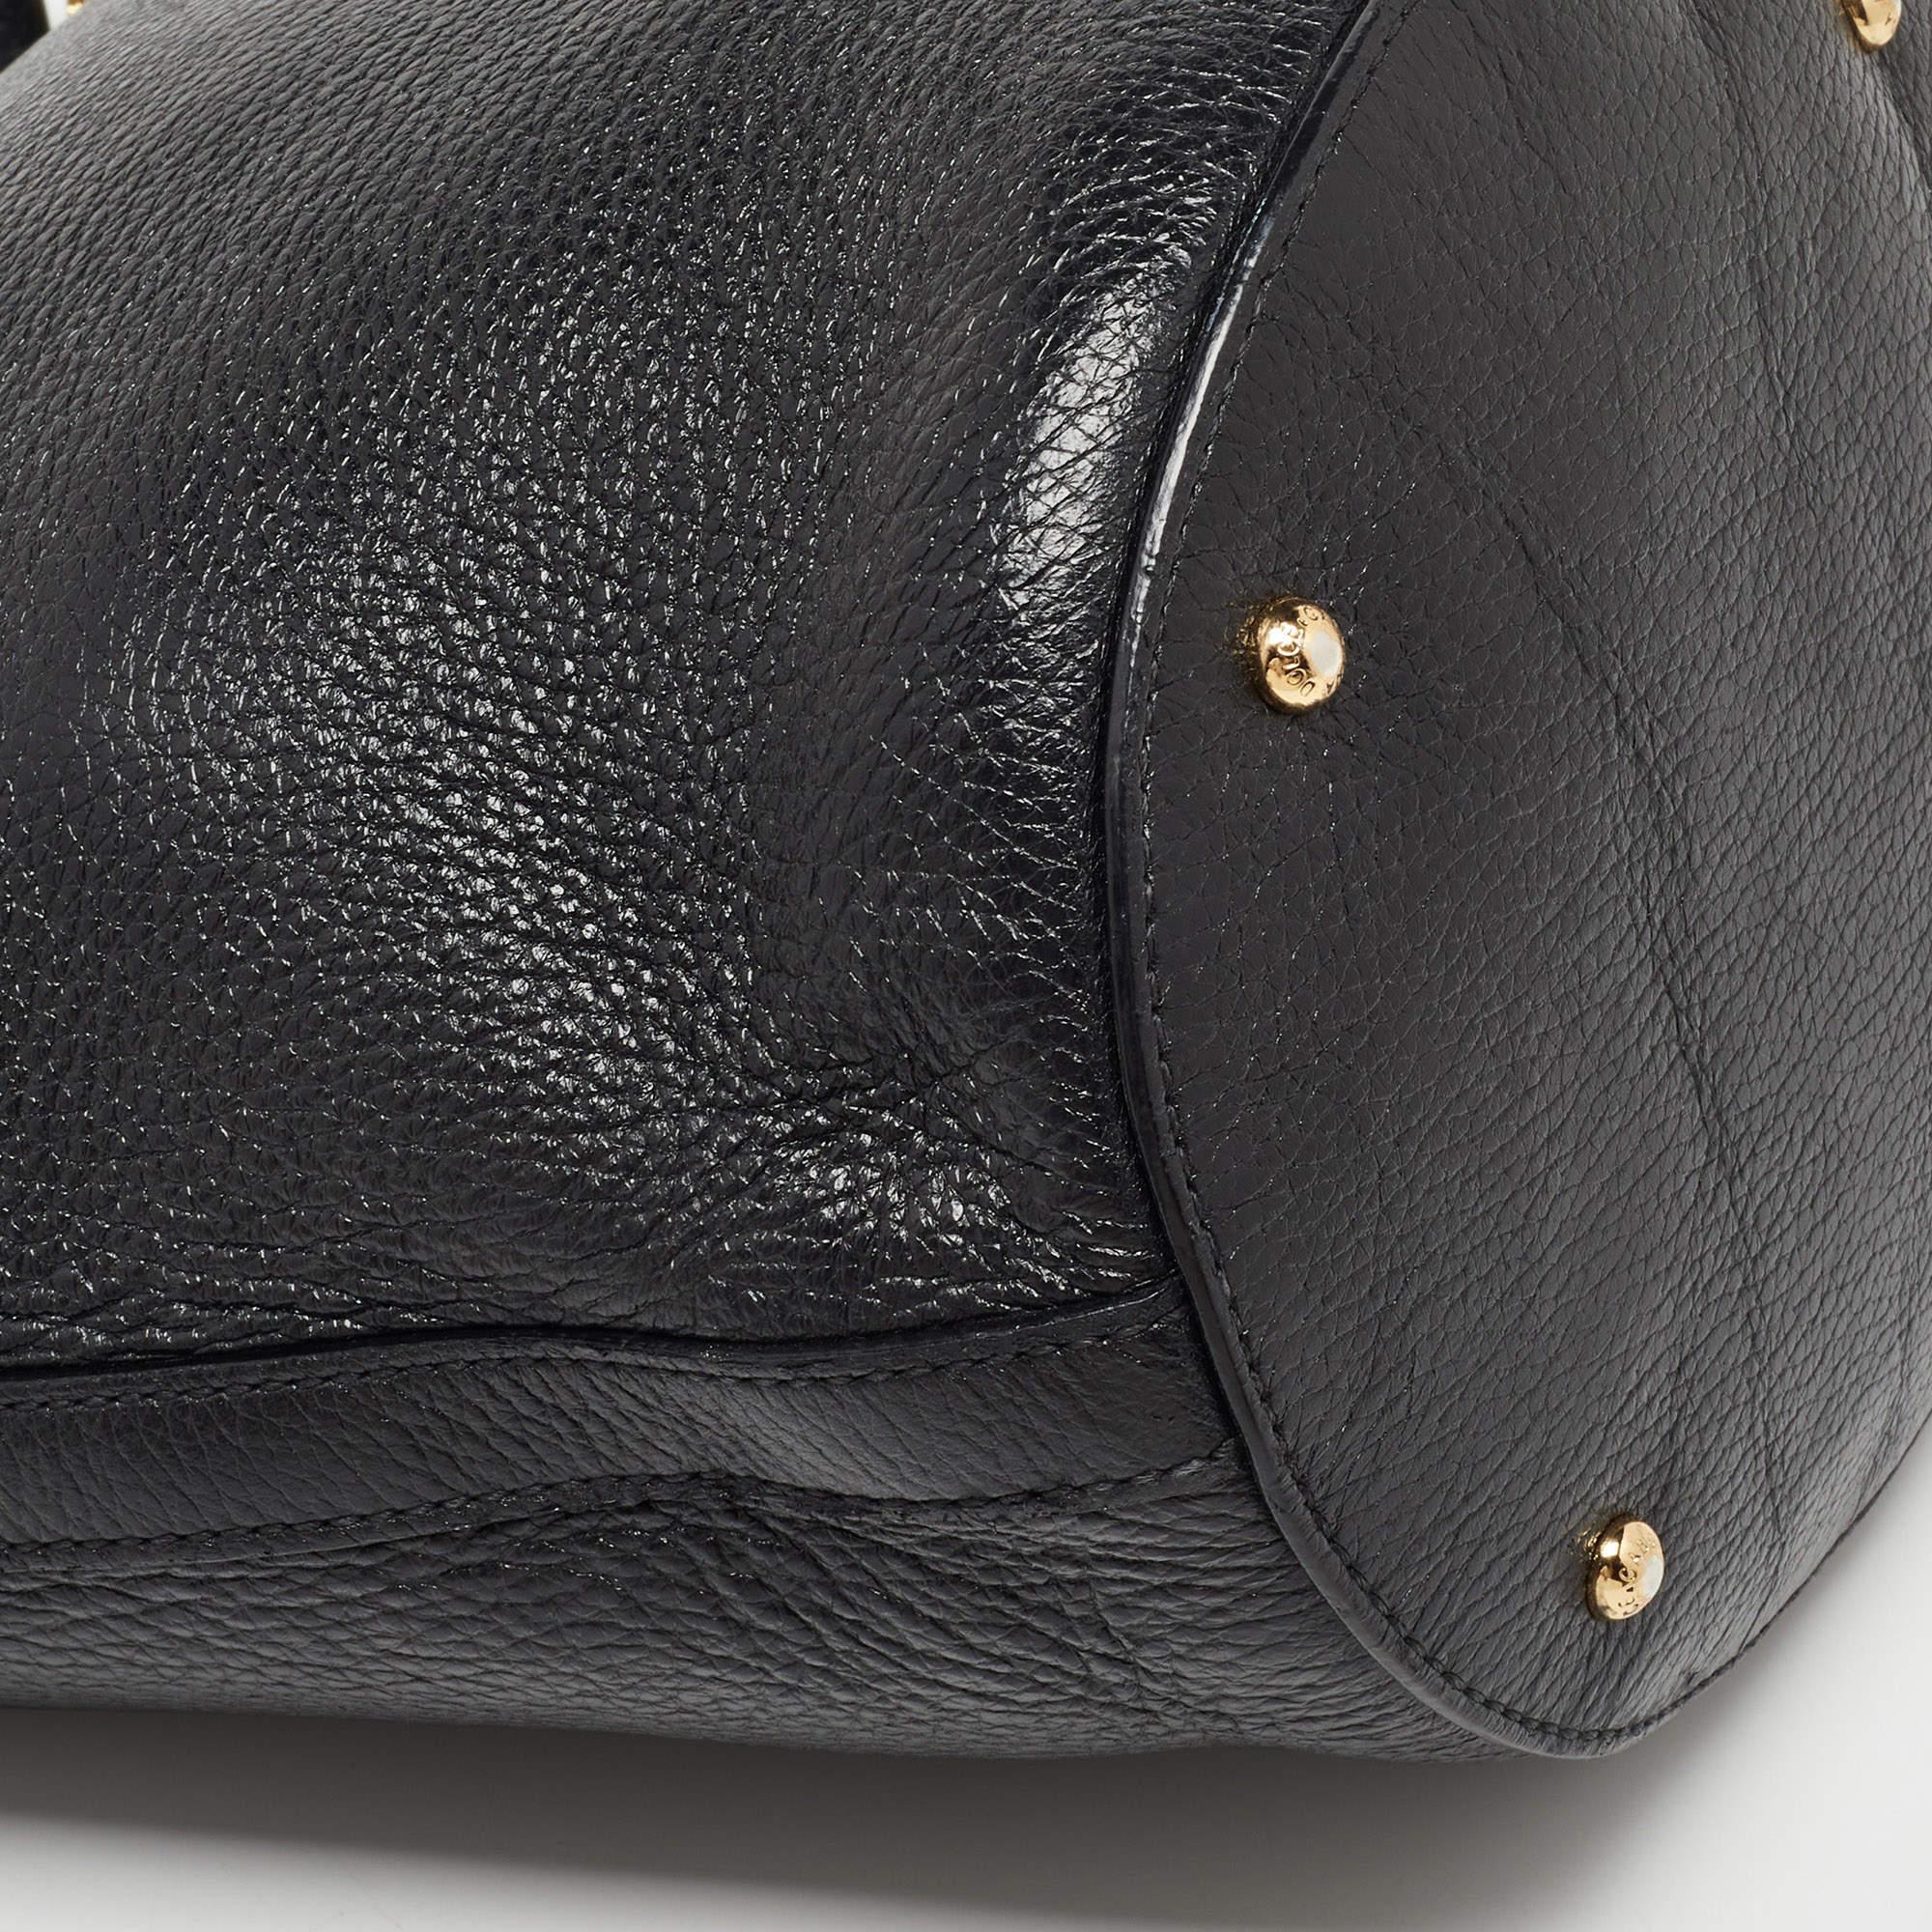 Women's Dolce & Gabbana Black Soft Leather Bucket Bag For Sale